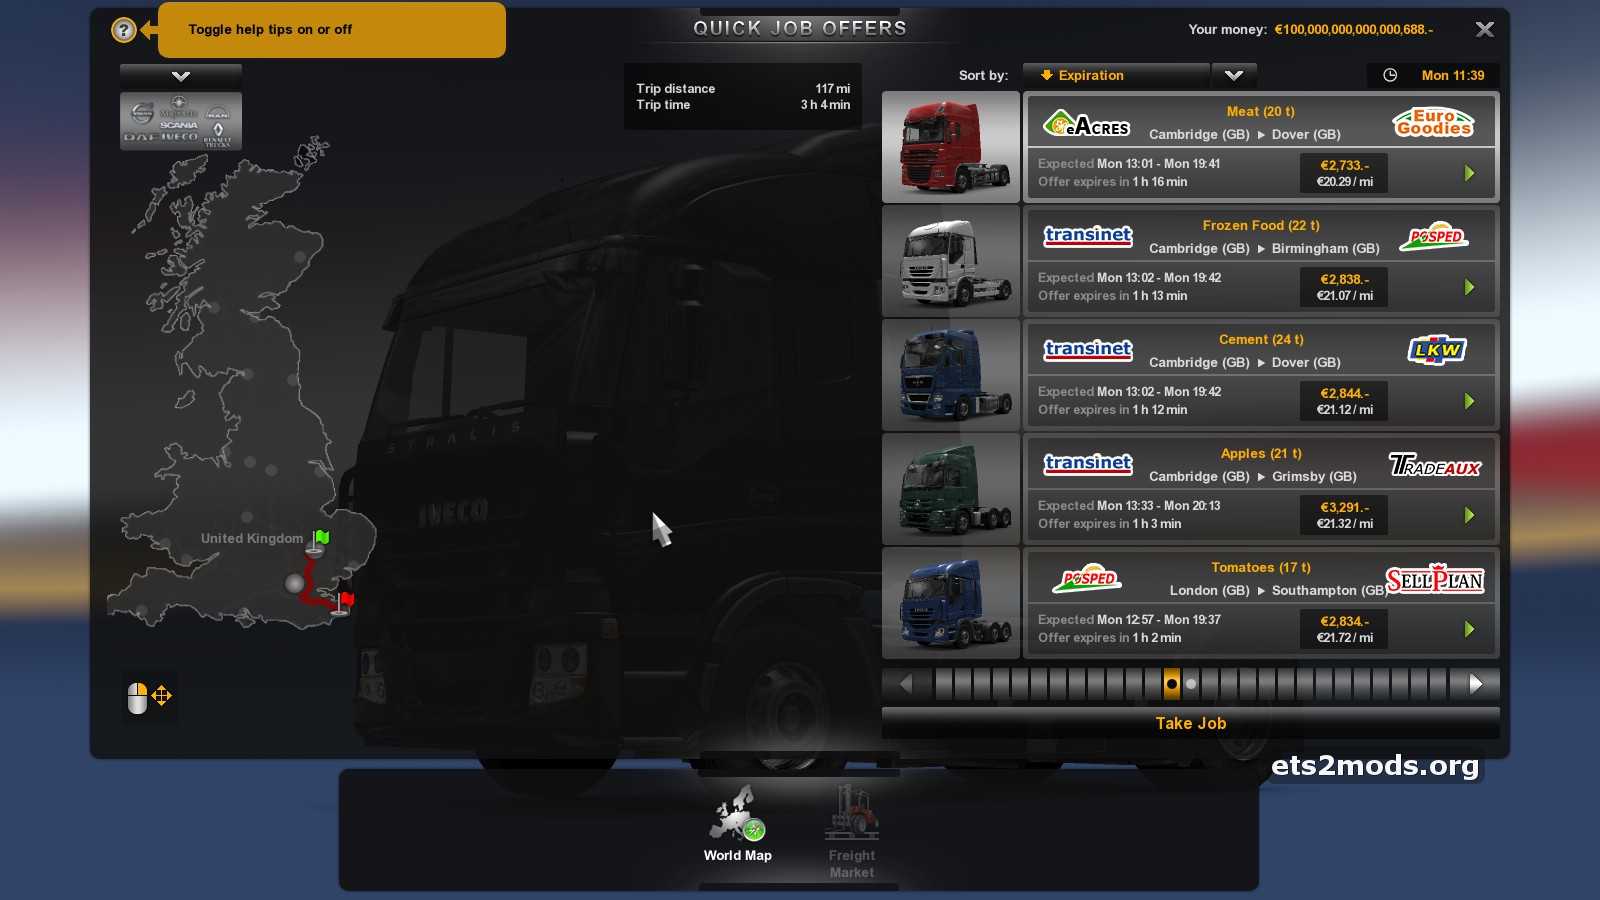 Heart of russia для euro truck simulator 2 перенесли. возможно, на десятилетие